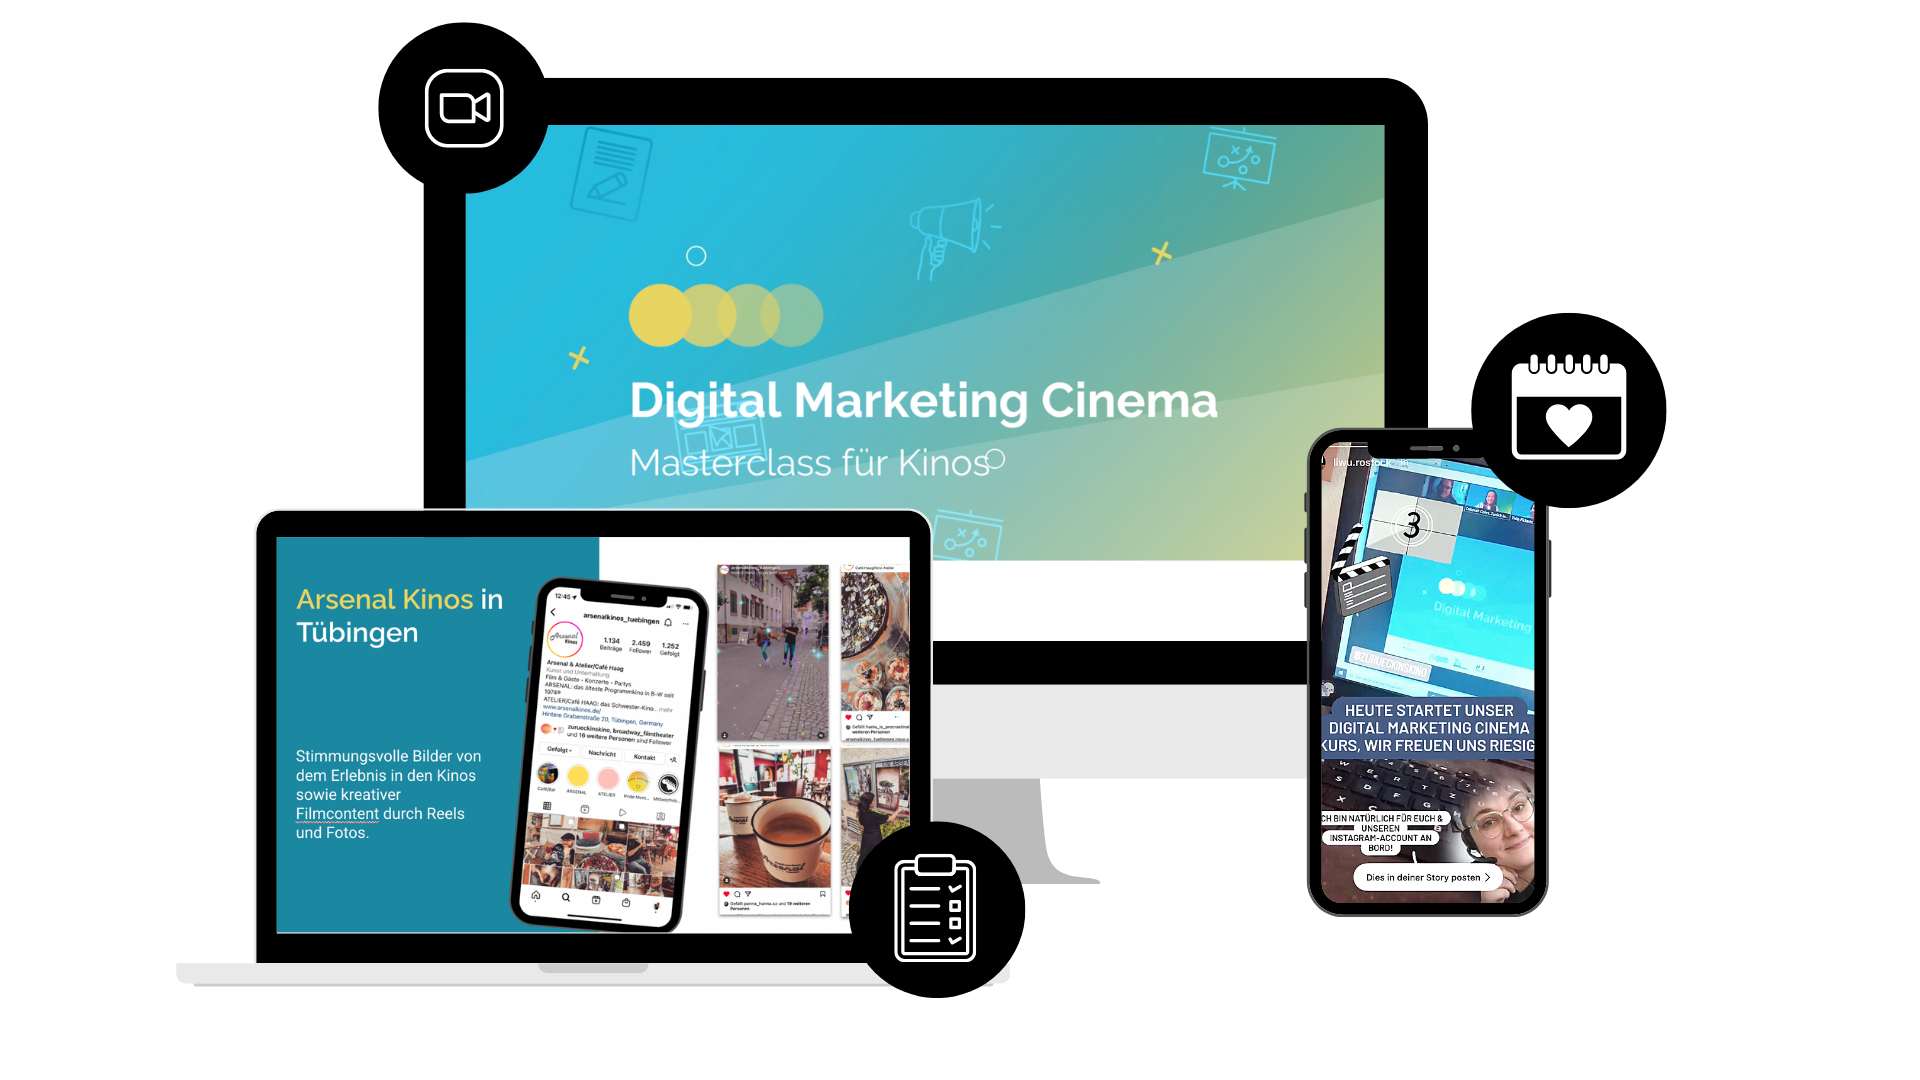 Digital Marketing Cinema Masterclass